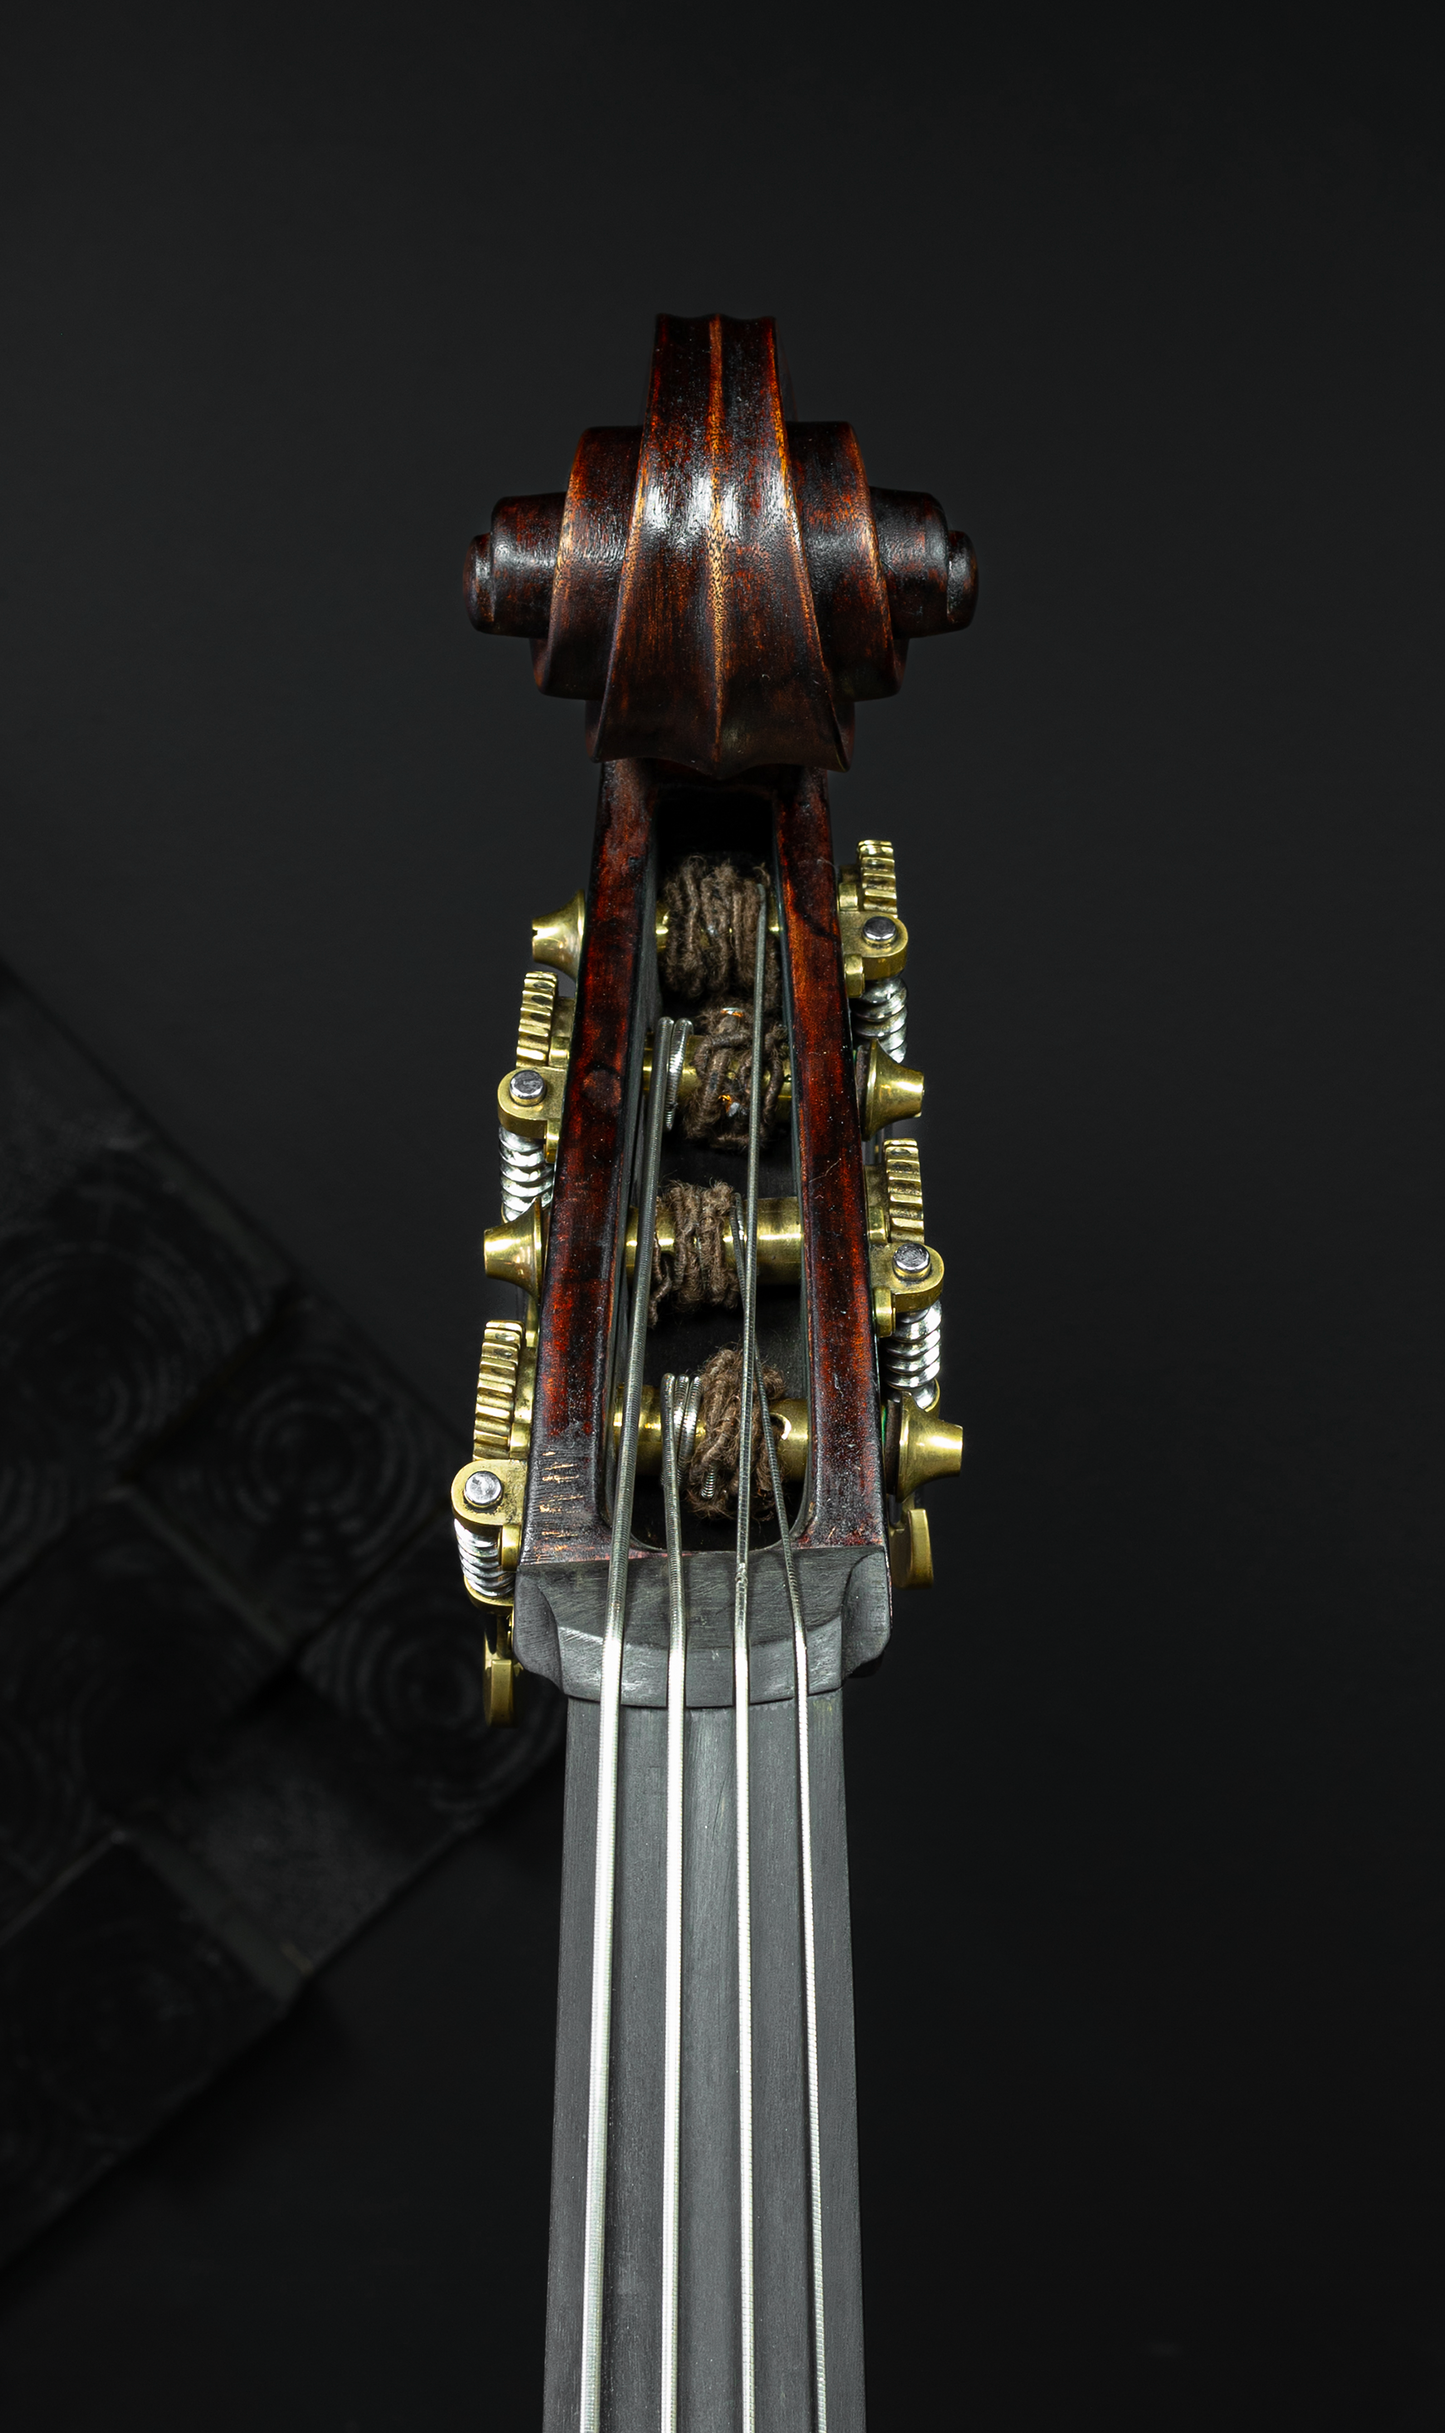 Kolstein Busetto Model Bass